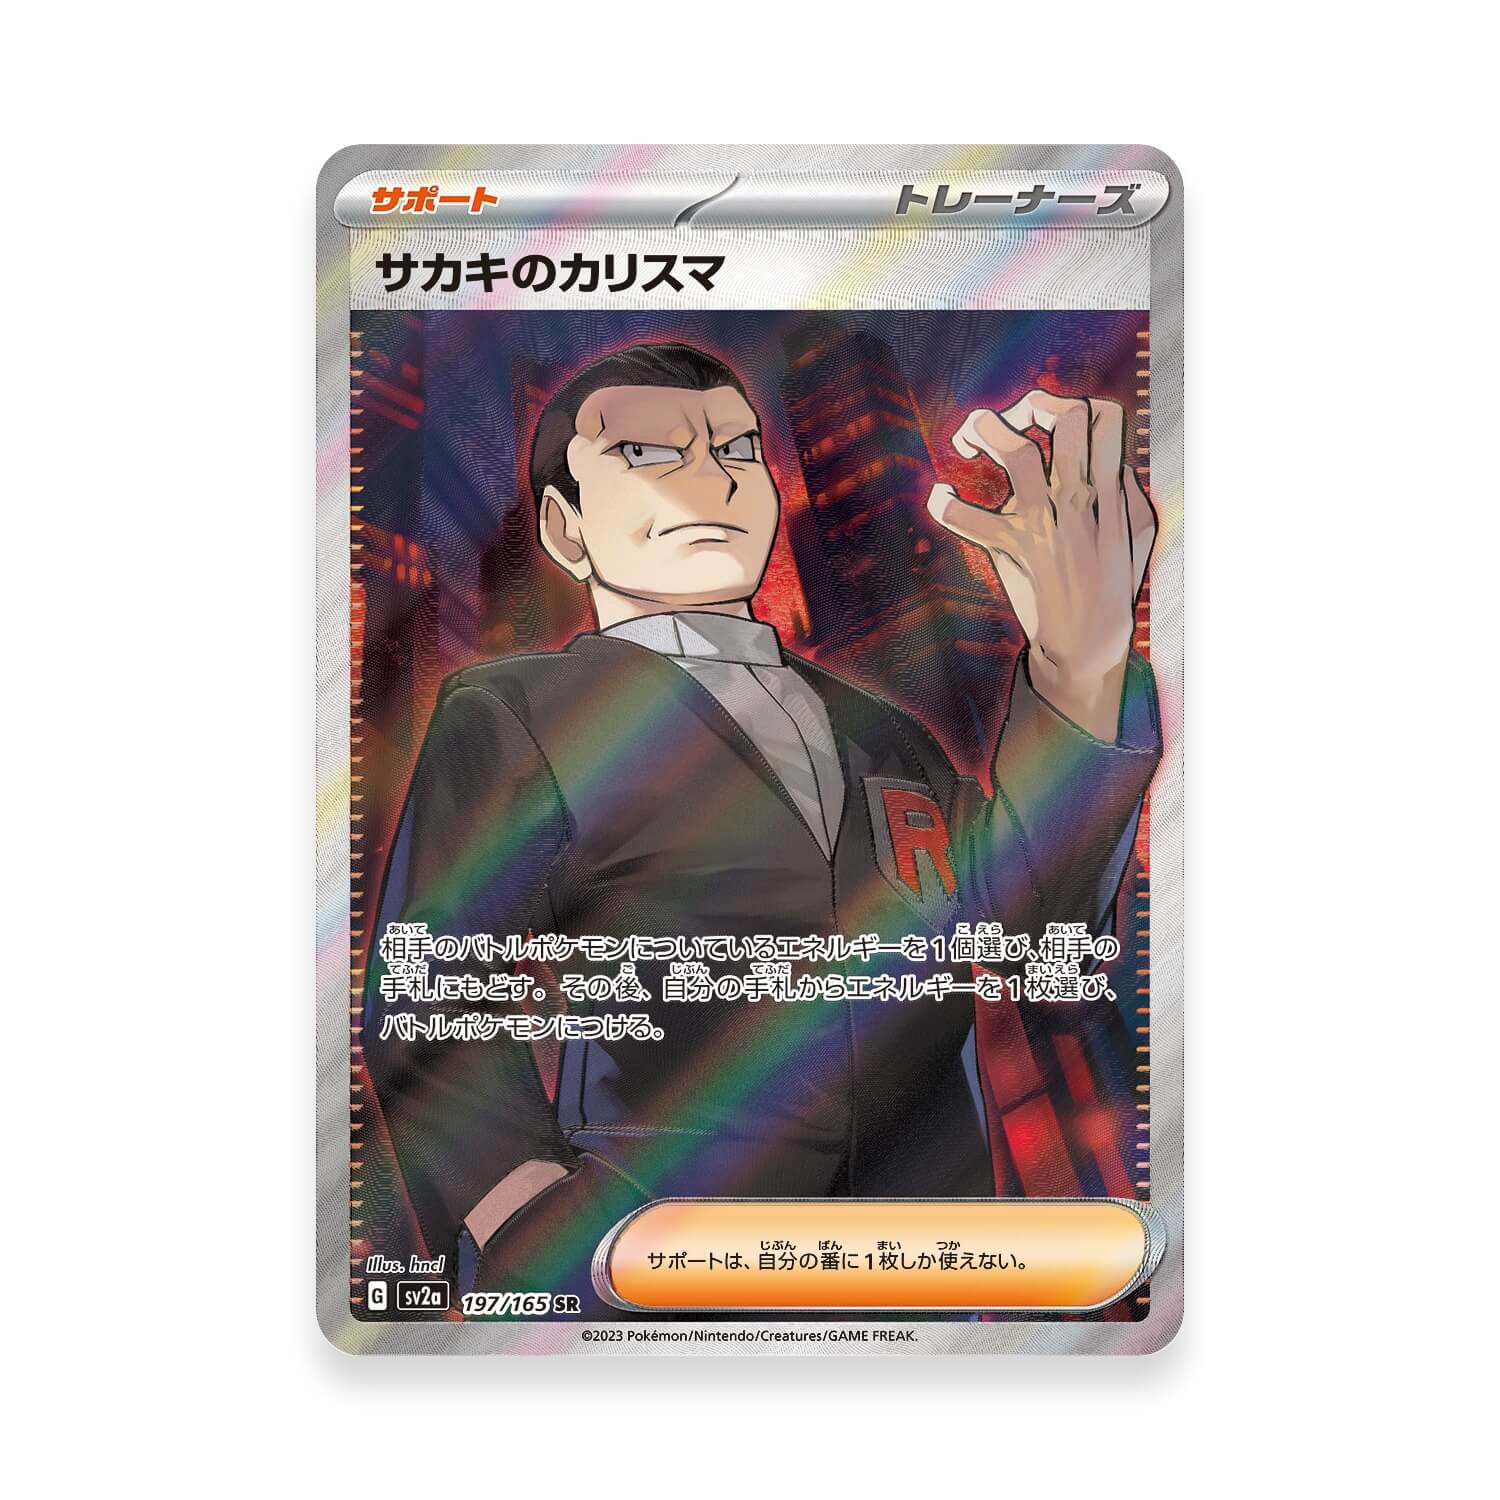 Giovanni's Charisma 197/165 - Pokémon 151 (JAP)